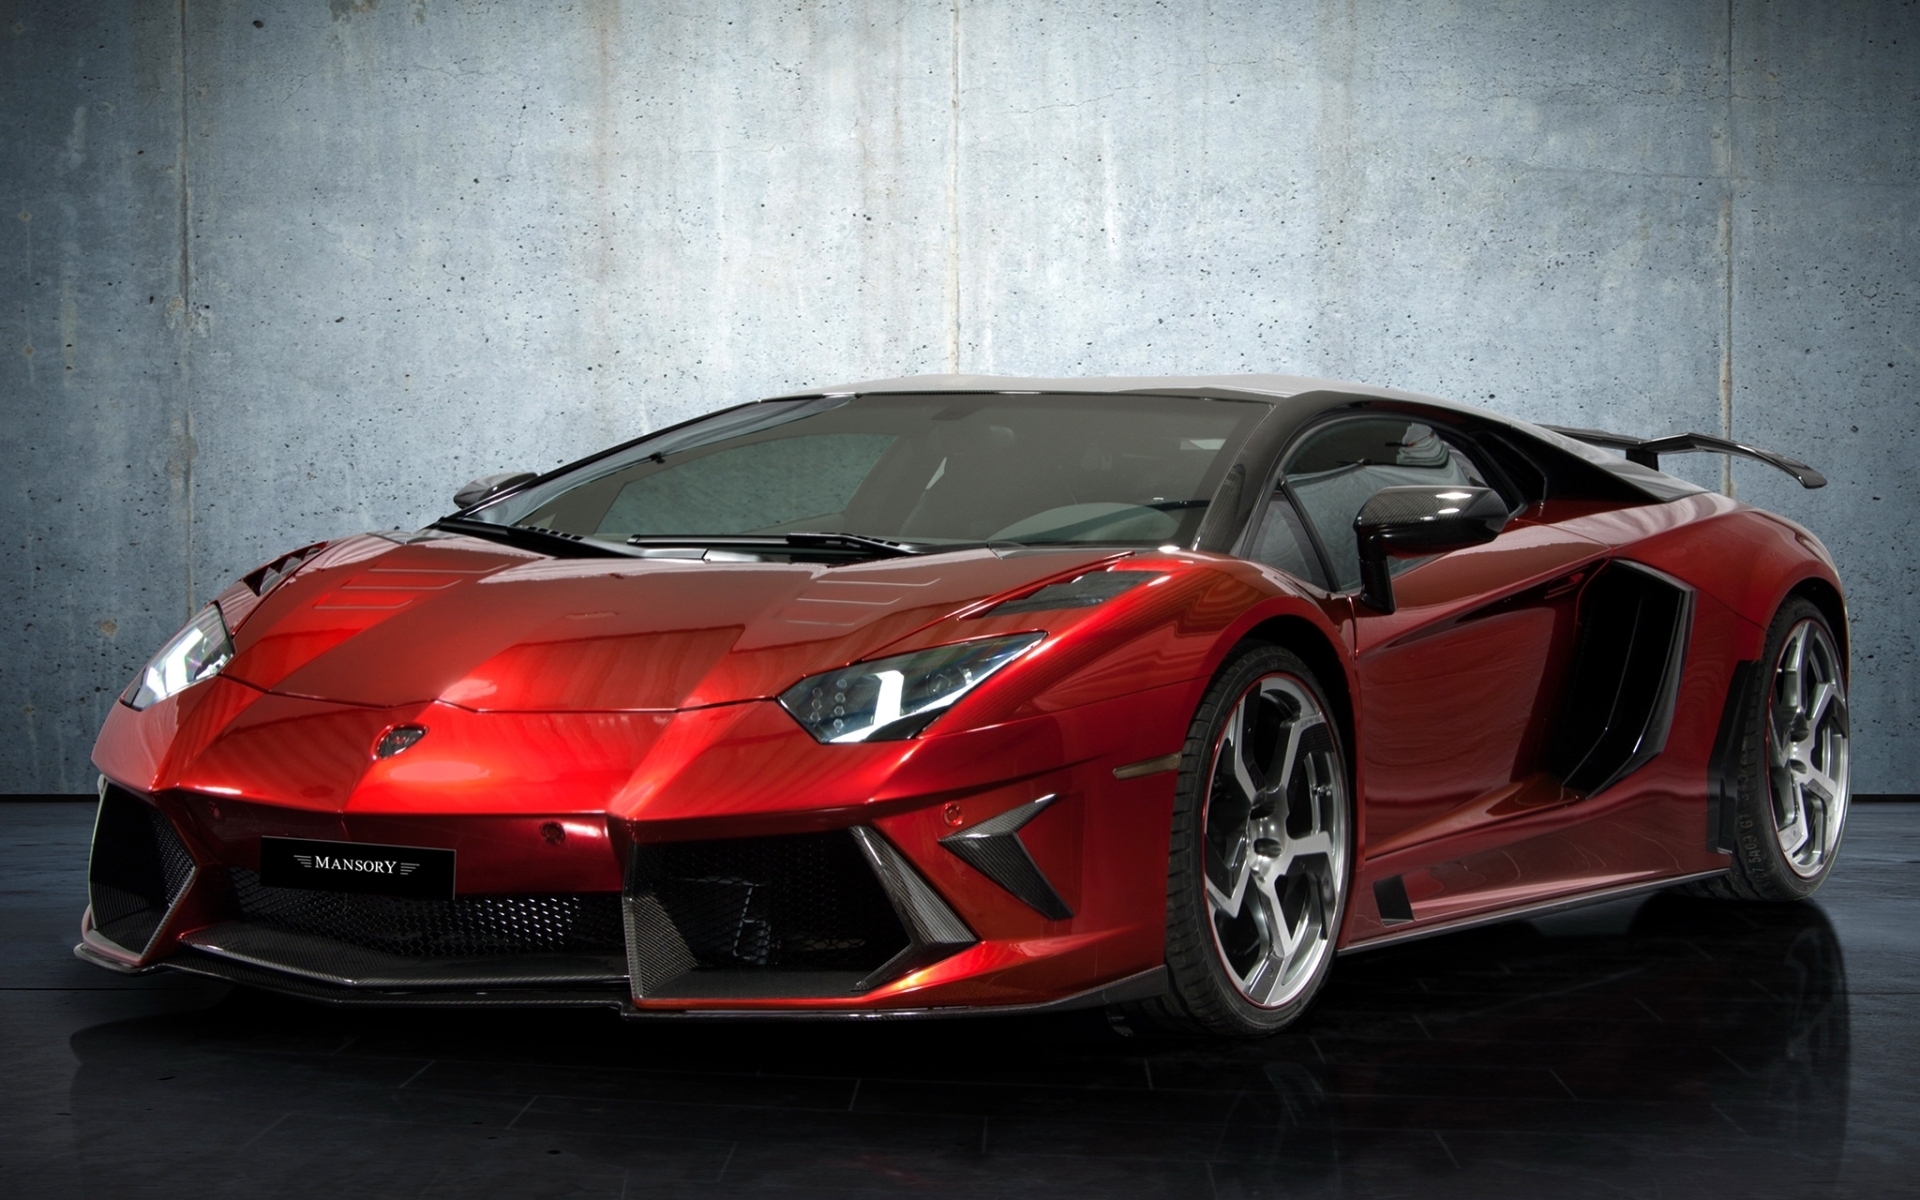 Télécharger des fonds d'écran Lamborghini Aventador HD